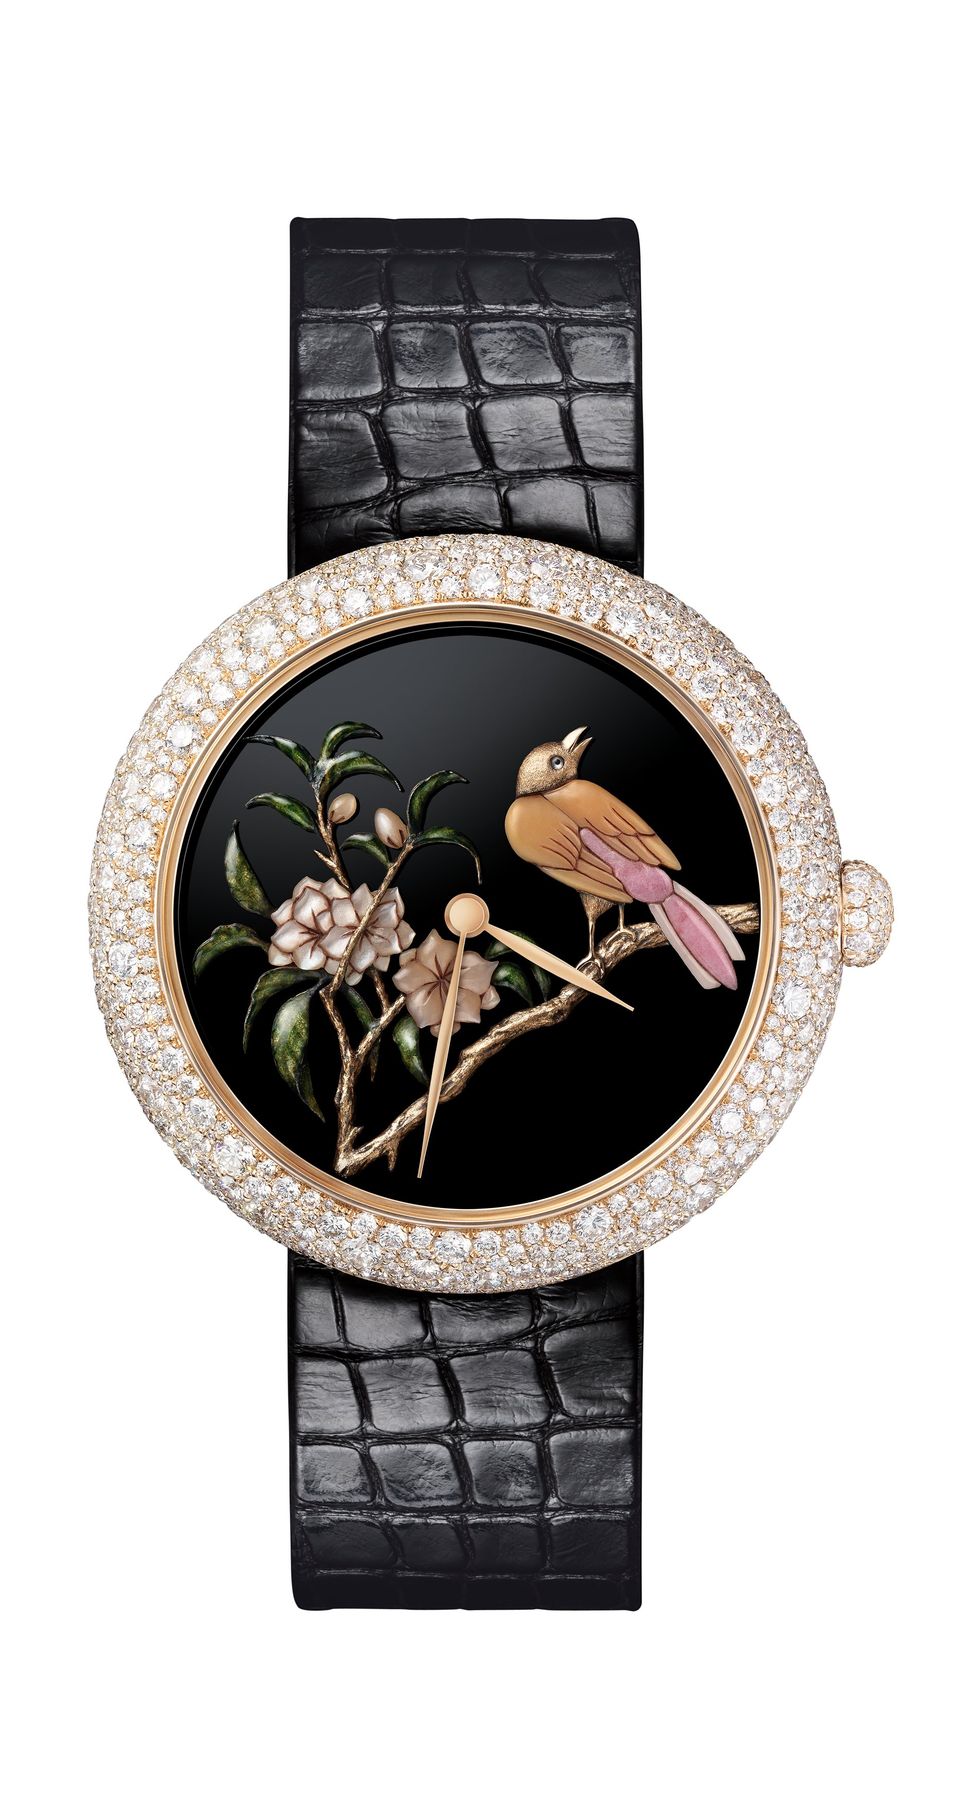 MADEMOISELLE PRIVÉ 腕錶面盤以各式寶石雕刻及微型彩繪技藝，細緻生動的呈現屏風花鳥圖騰之美。